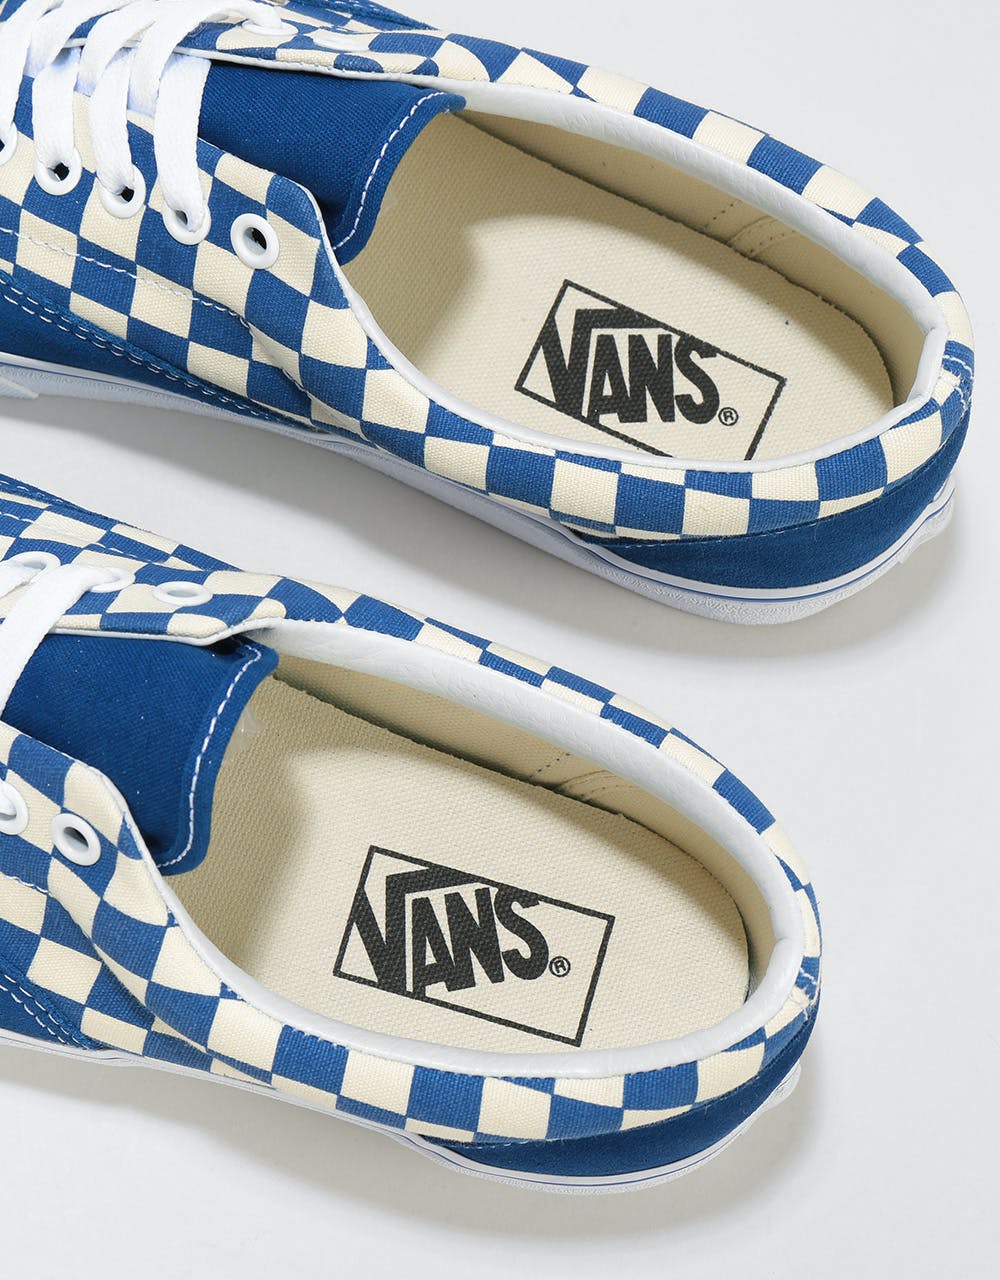 Vans Era Skate Shoes - (Primary Check) True Blue/White